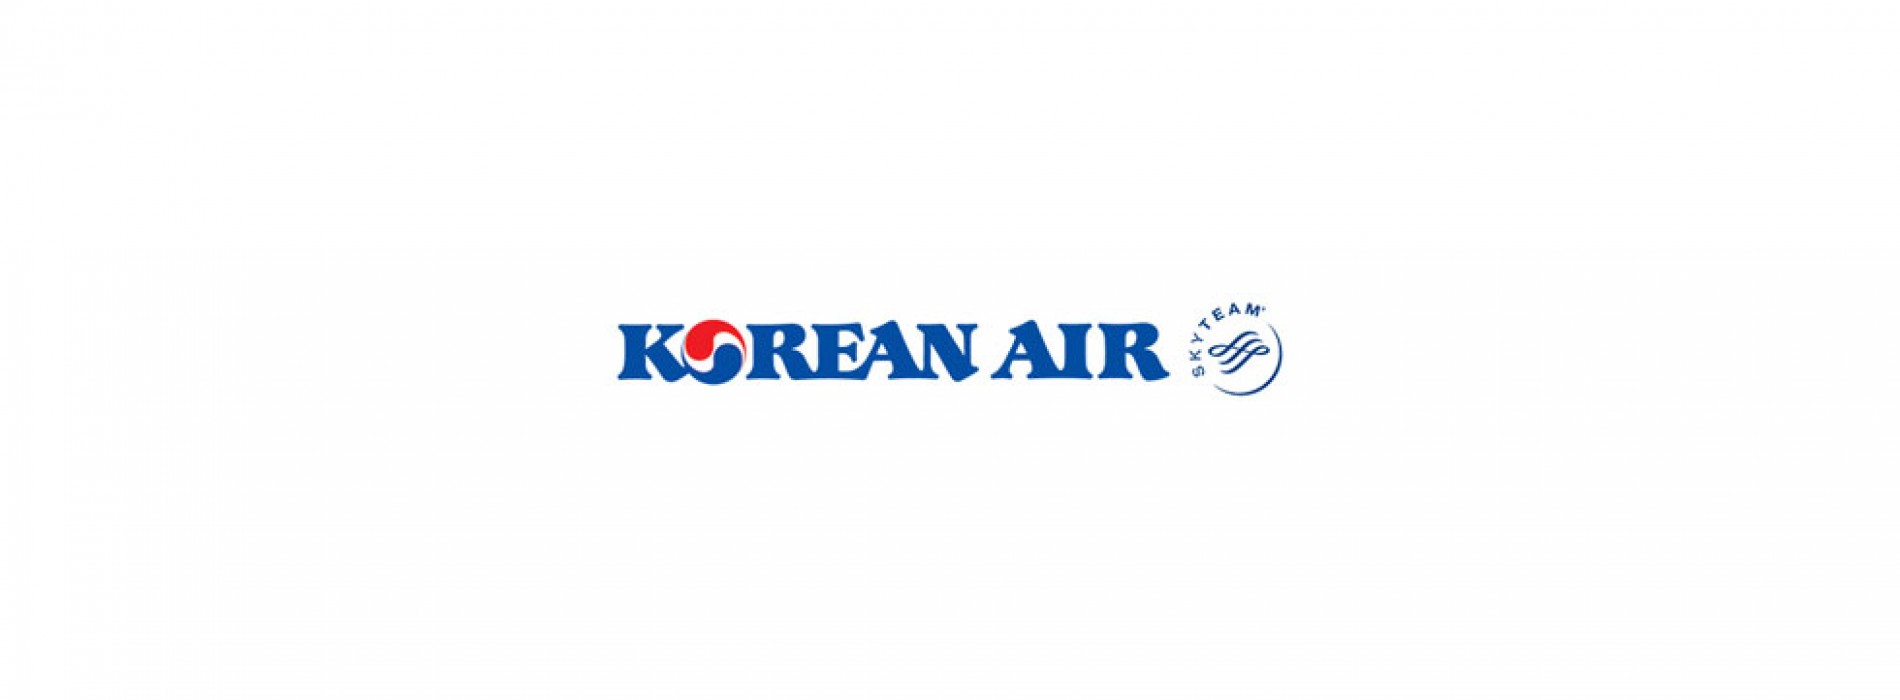 Korean Air adds Delhi in international route revamp